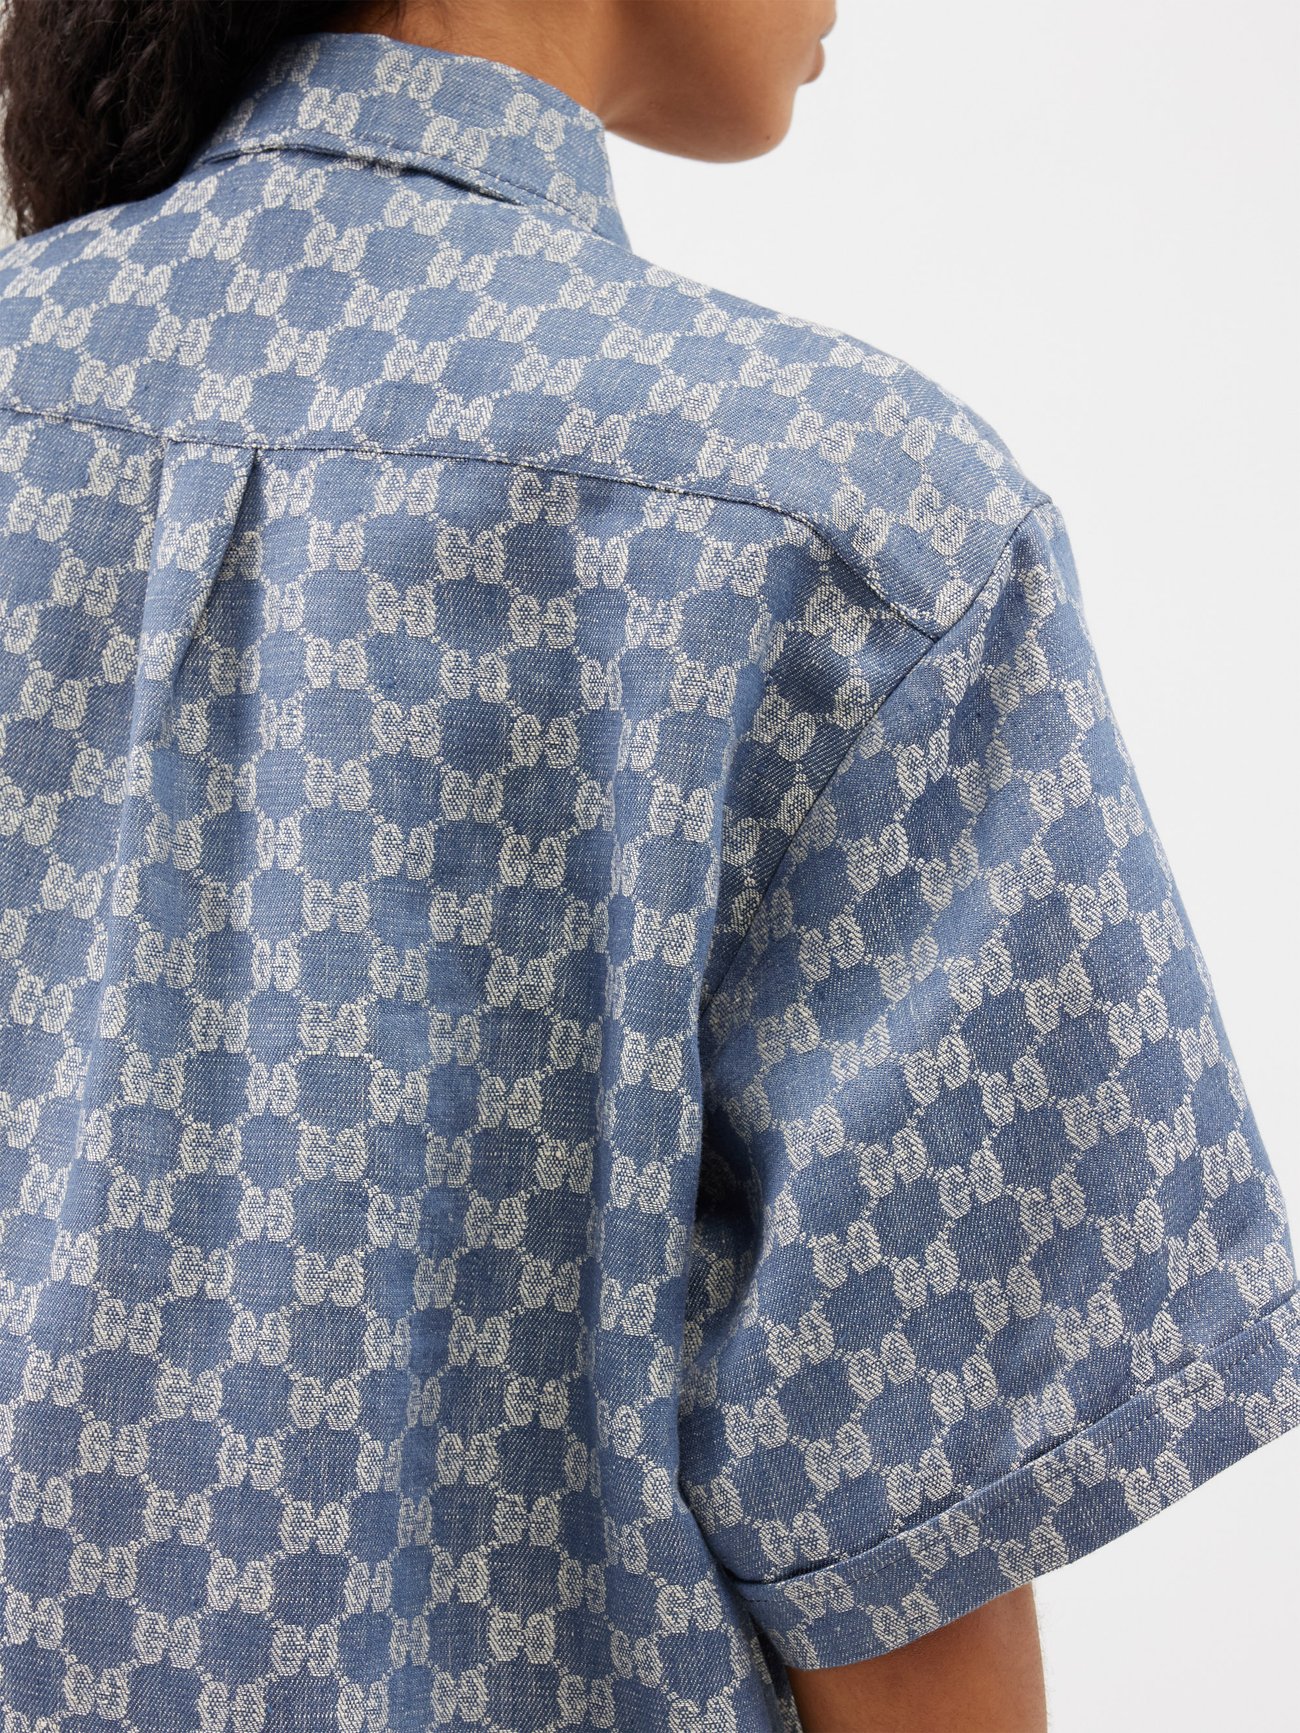 Gucci GG jacquard denim shirt